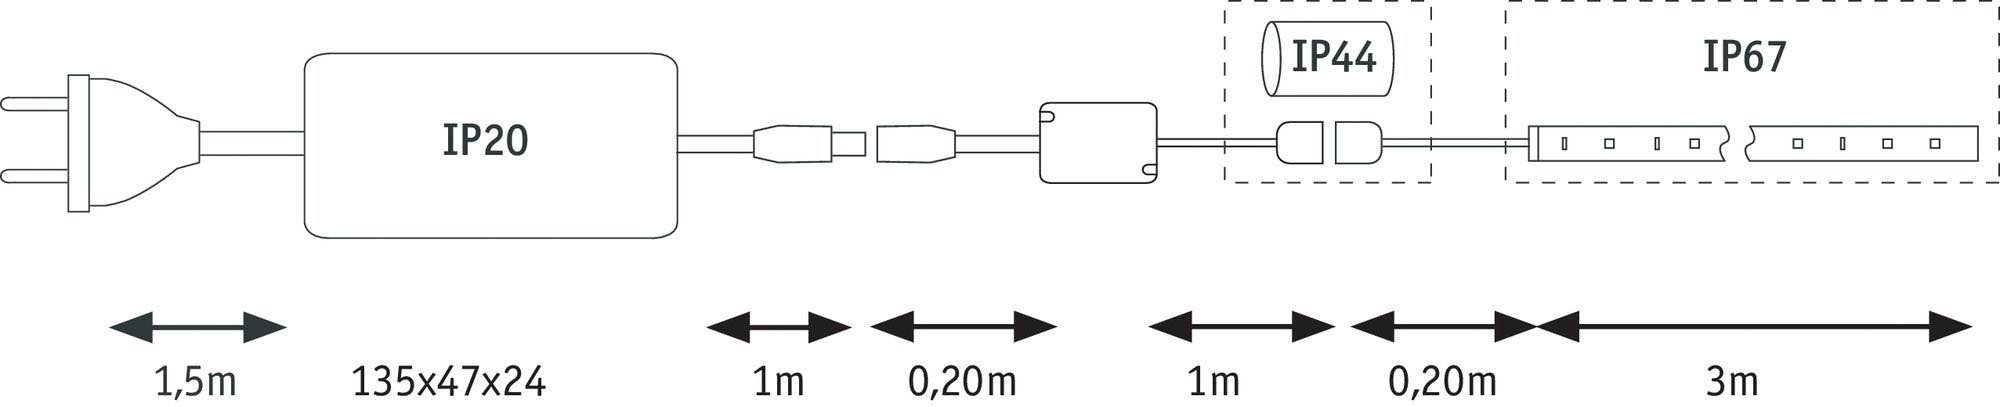 Flow LED-Streifen Basic 3m Set MaxLED Paulmann RGB